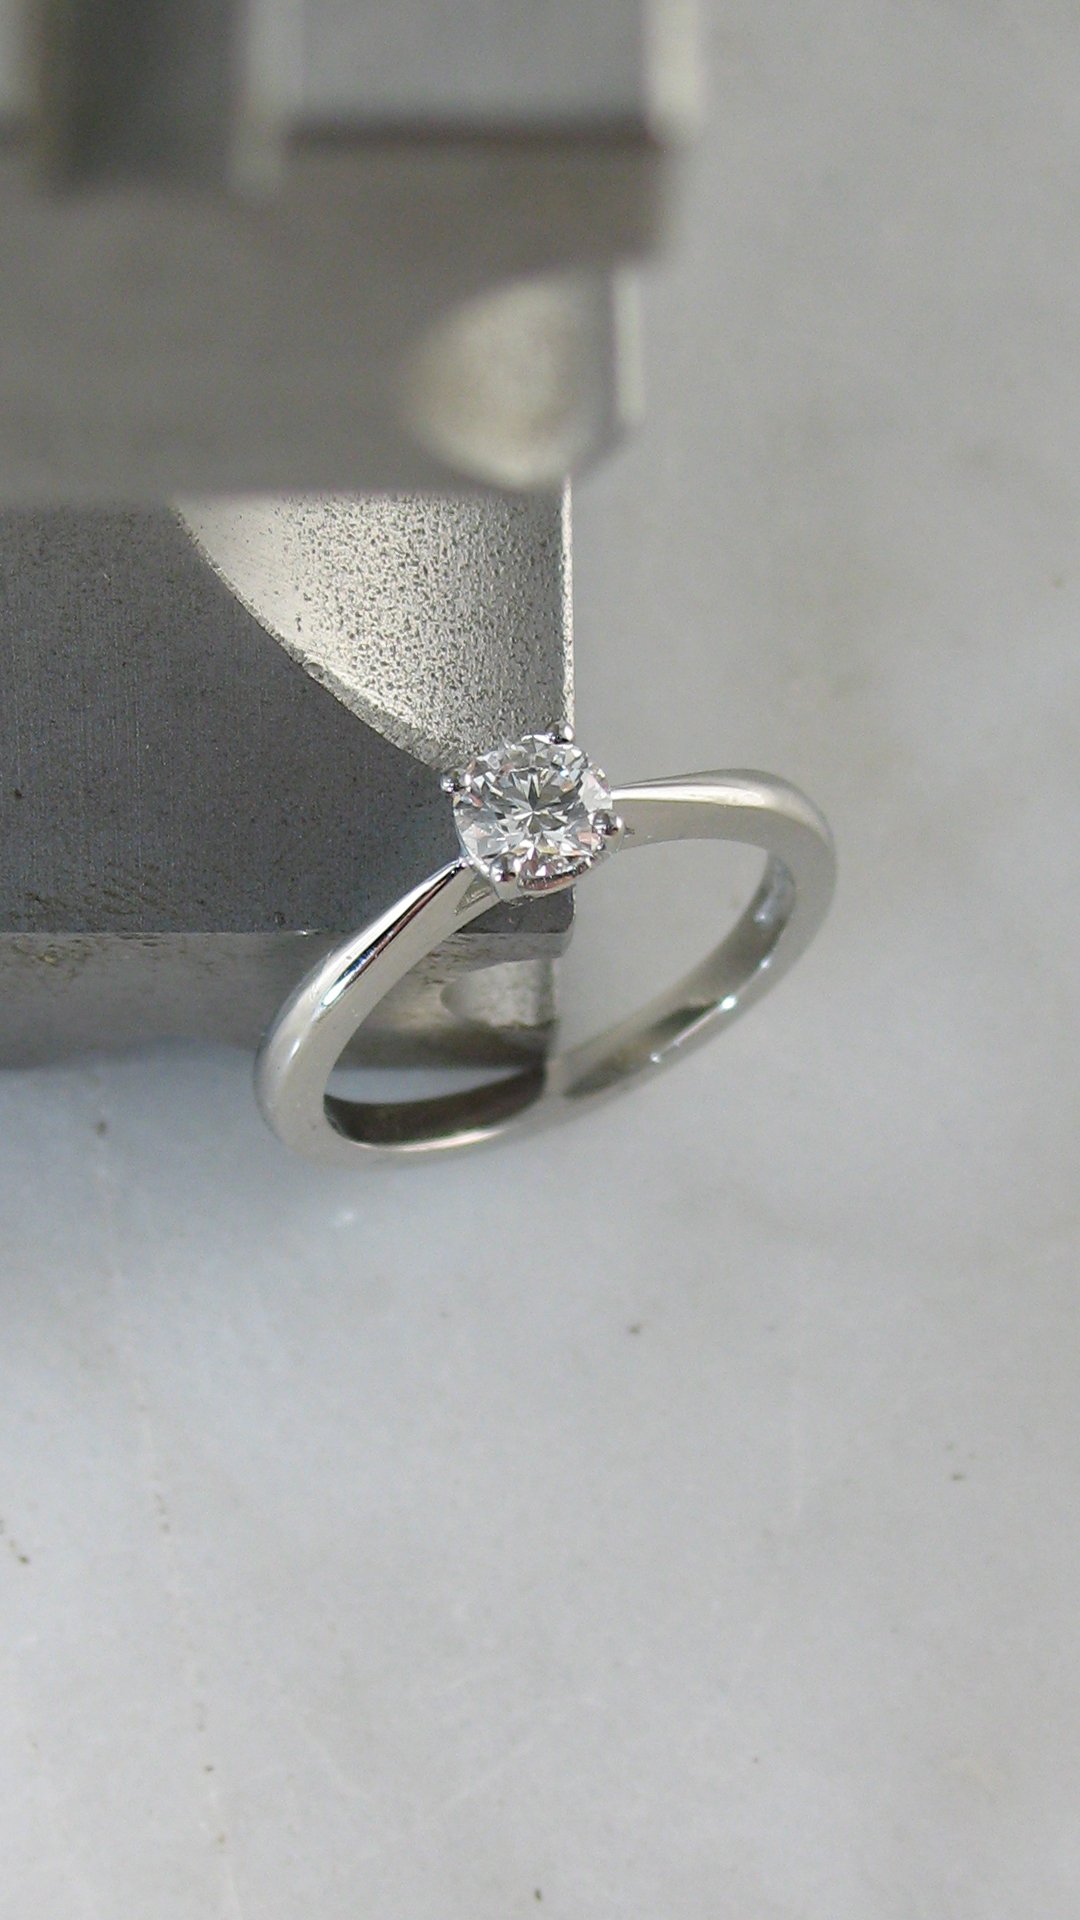 A dazzling bezel set solitaire diamond engagement ring